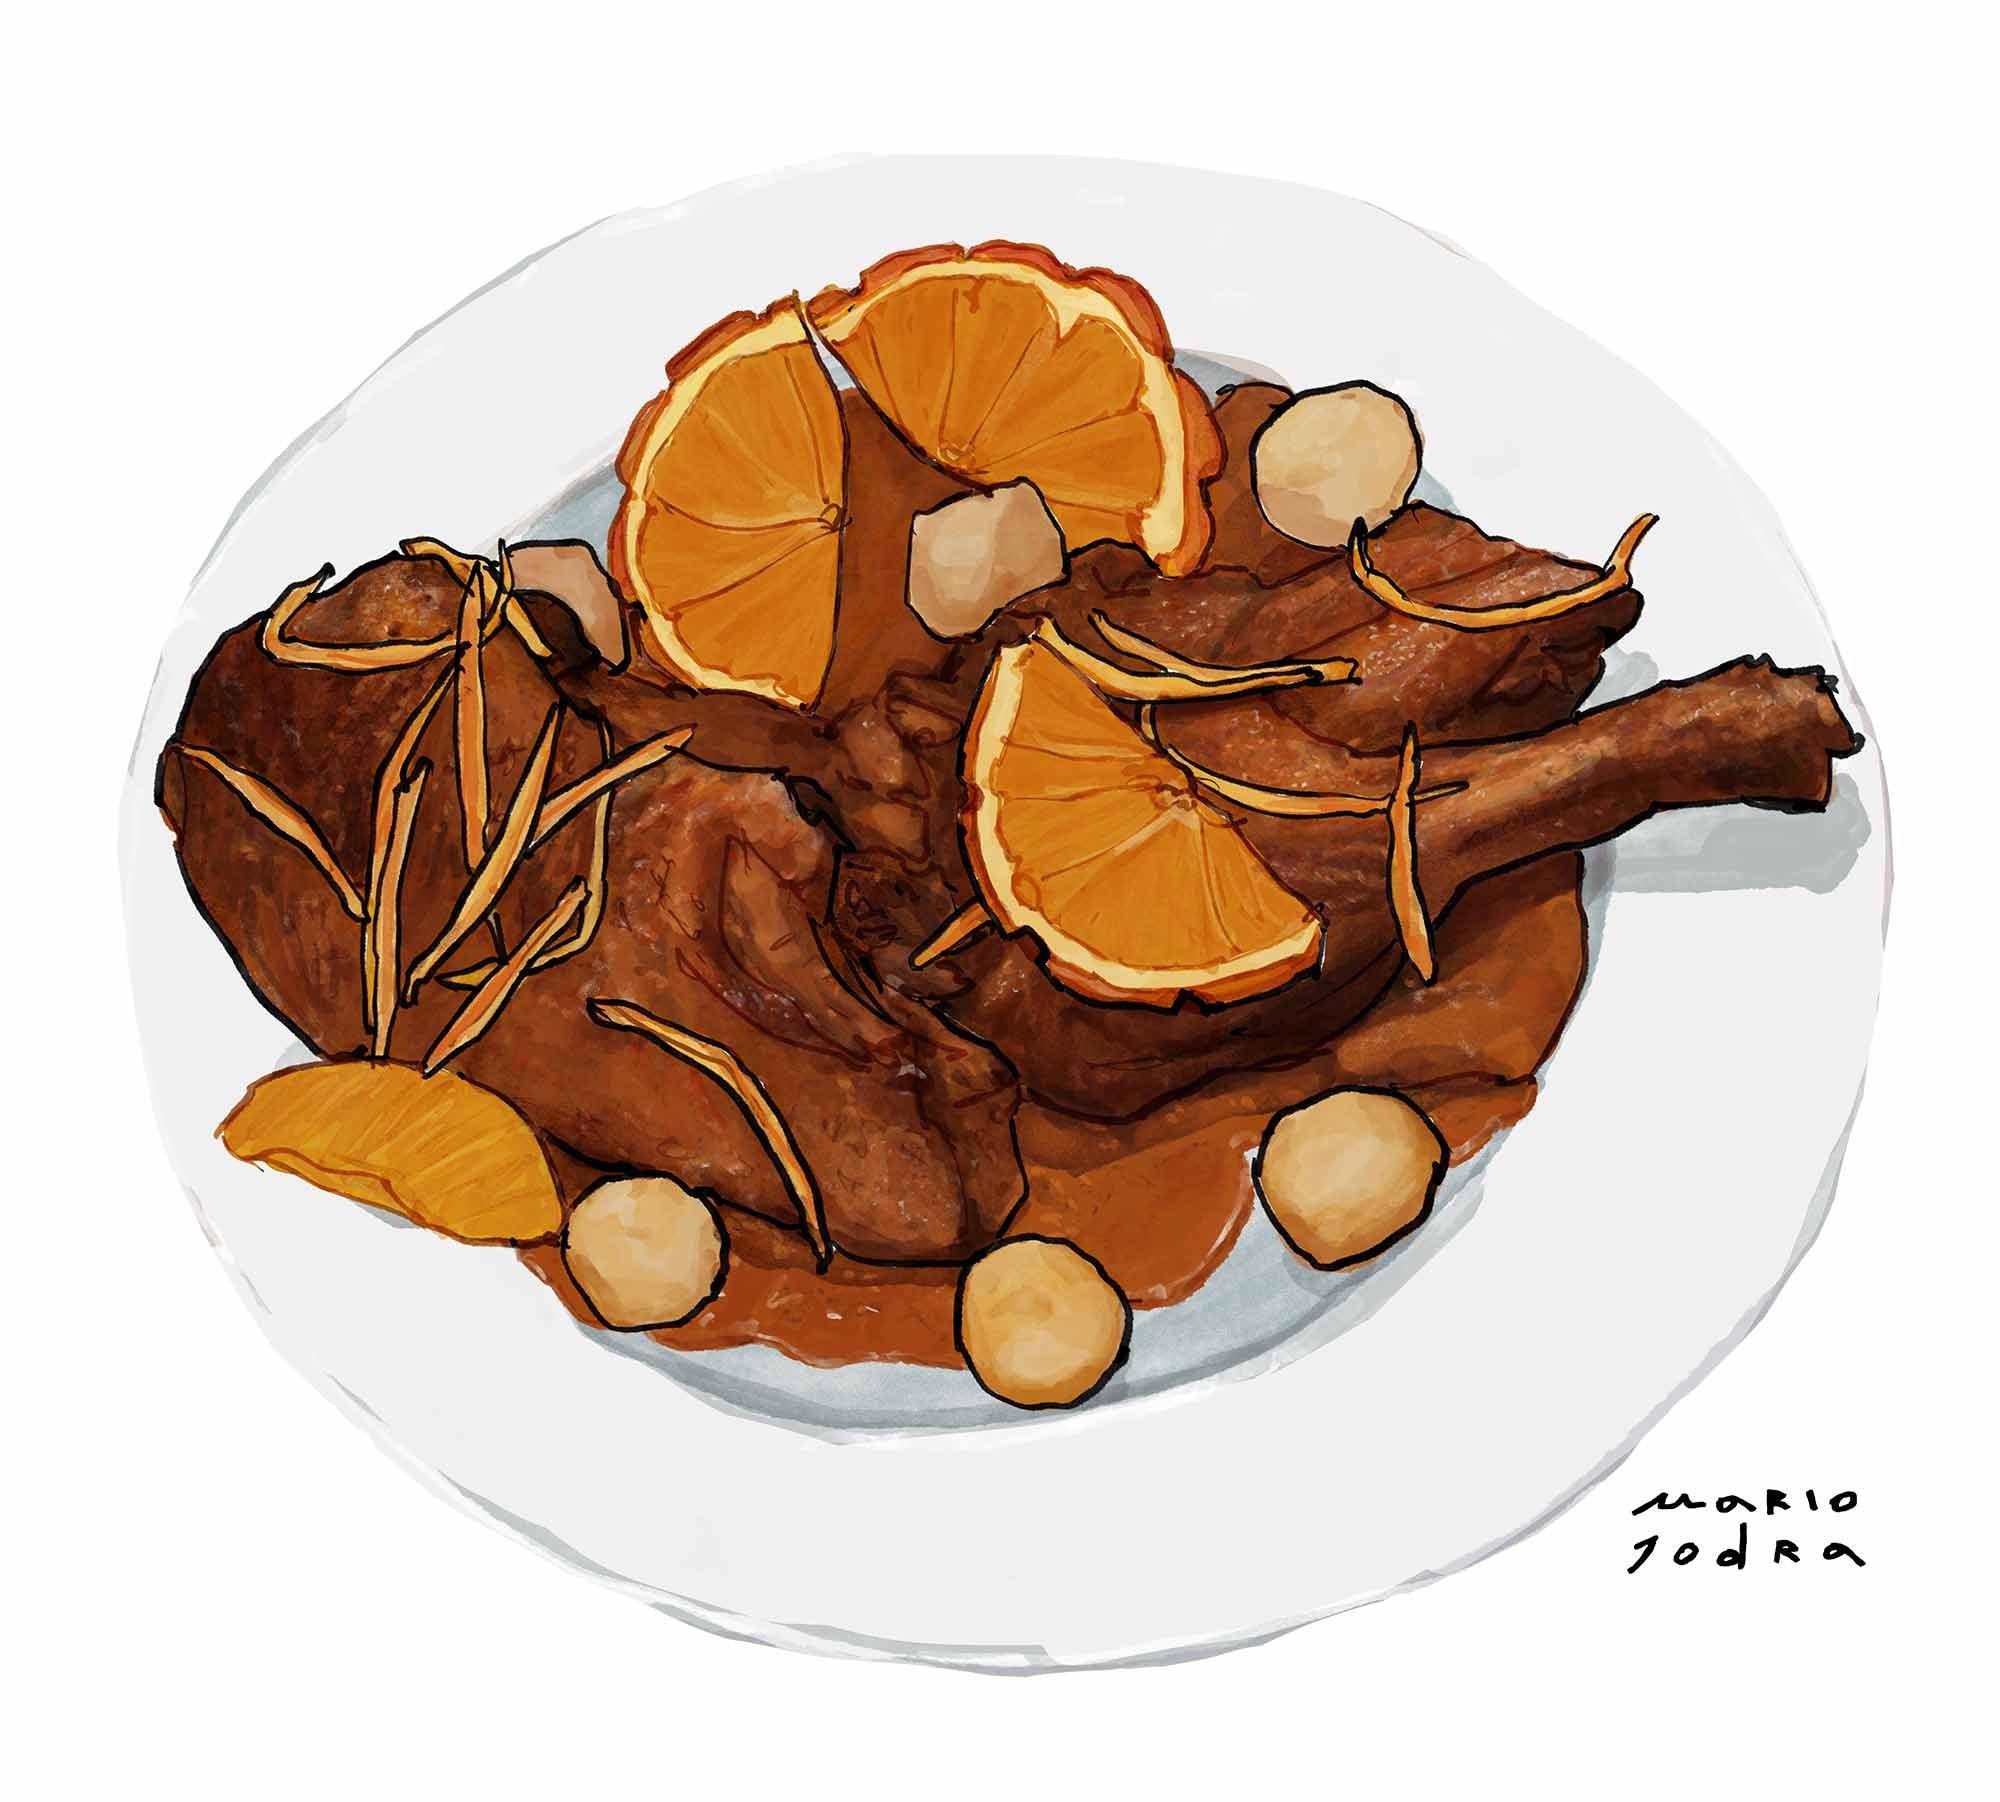 Mario Jodra illustration Art - Lhardy: Pato silvestre al perfume de naranja